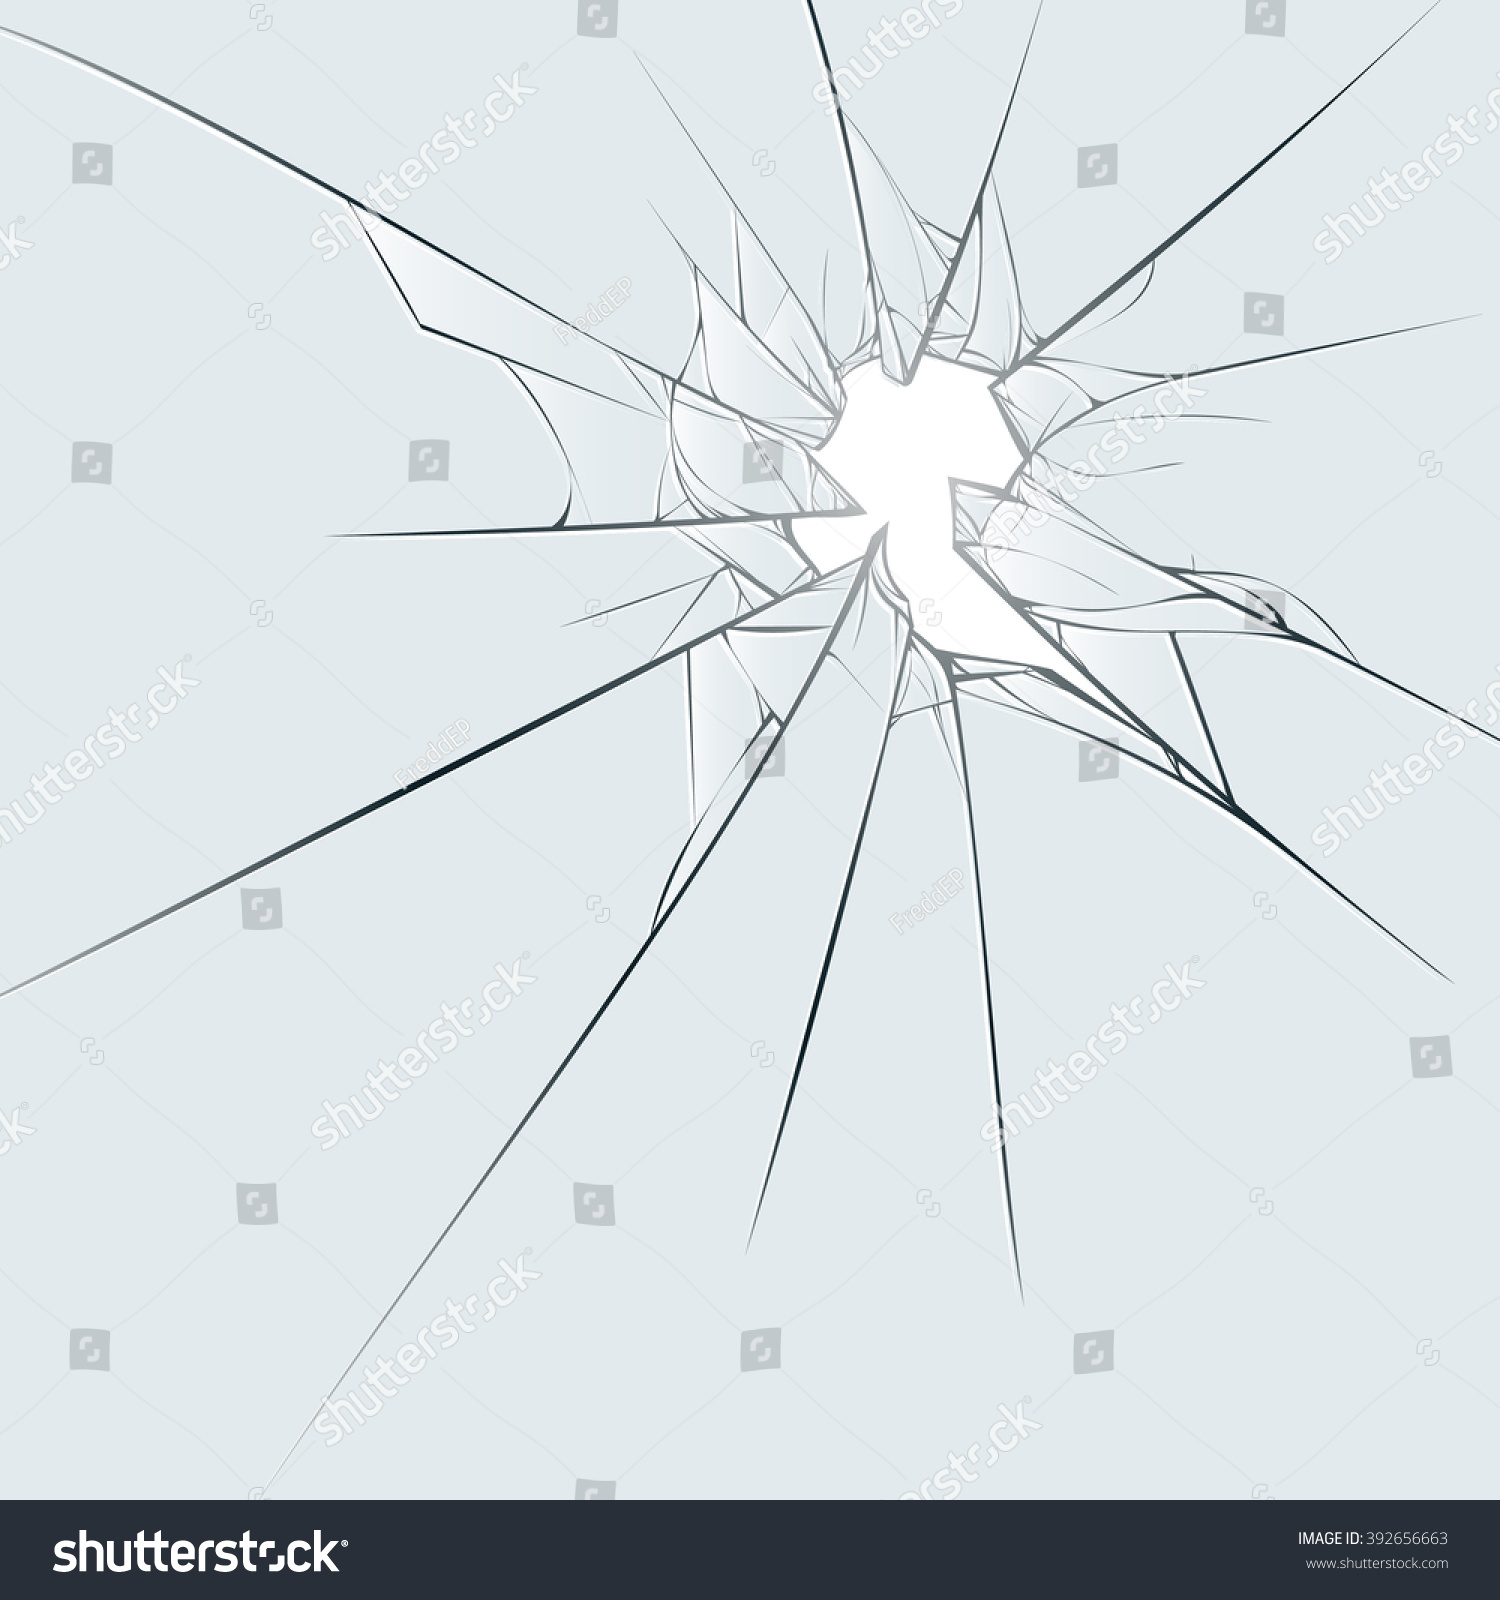 SVG of Broken glass on blue background. Cartoon vector illustration EPS10 svg